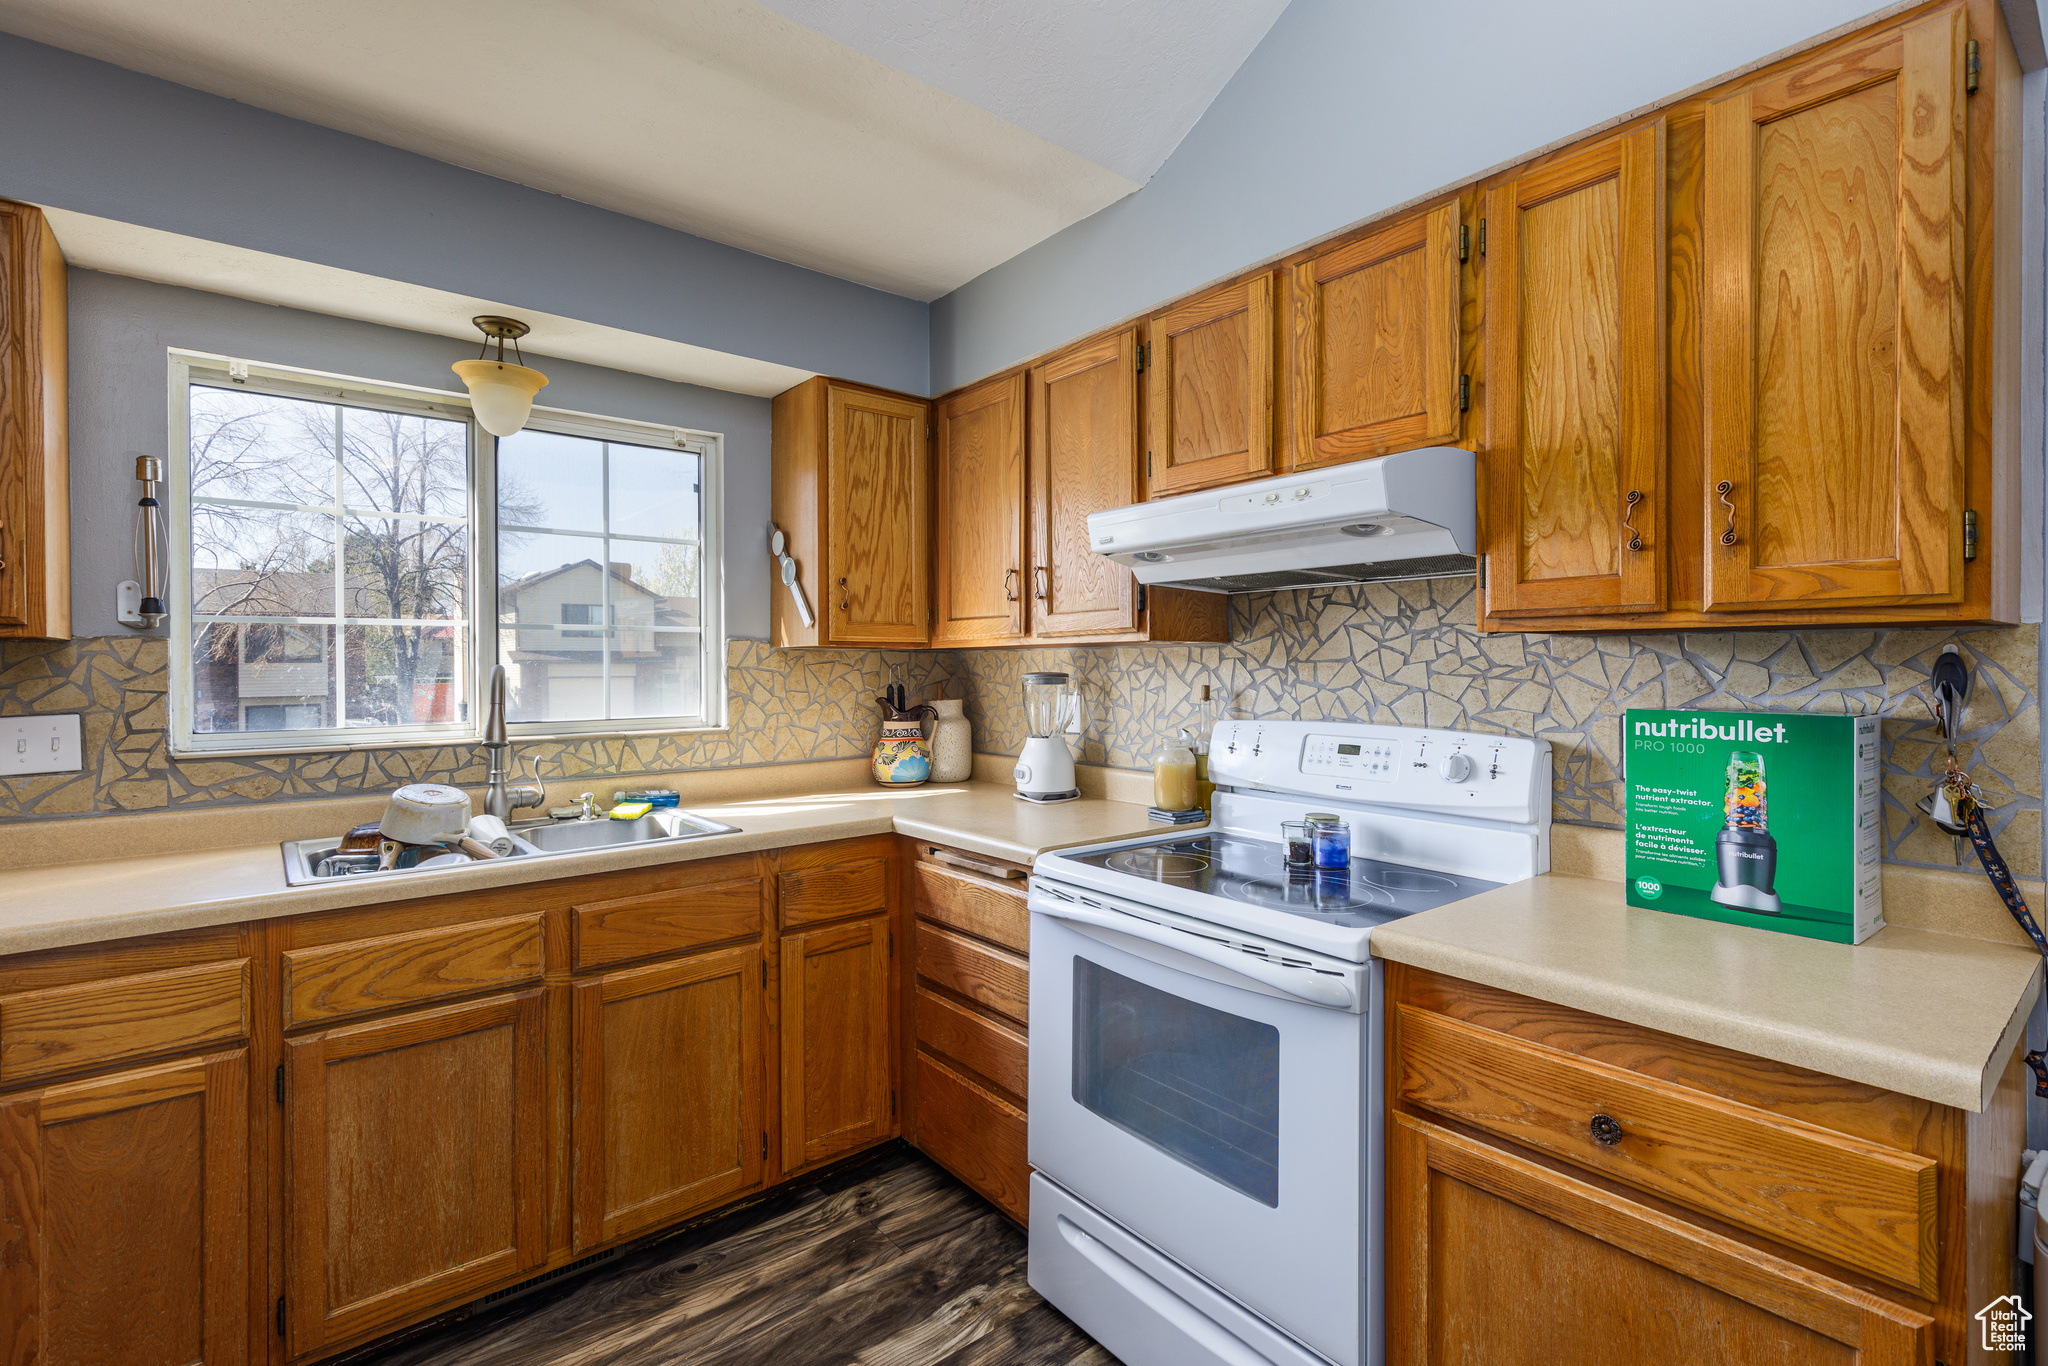 Kitchen featuring dark hardwood / wood-style floors, tasteful backsplash, white electric range, and sink